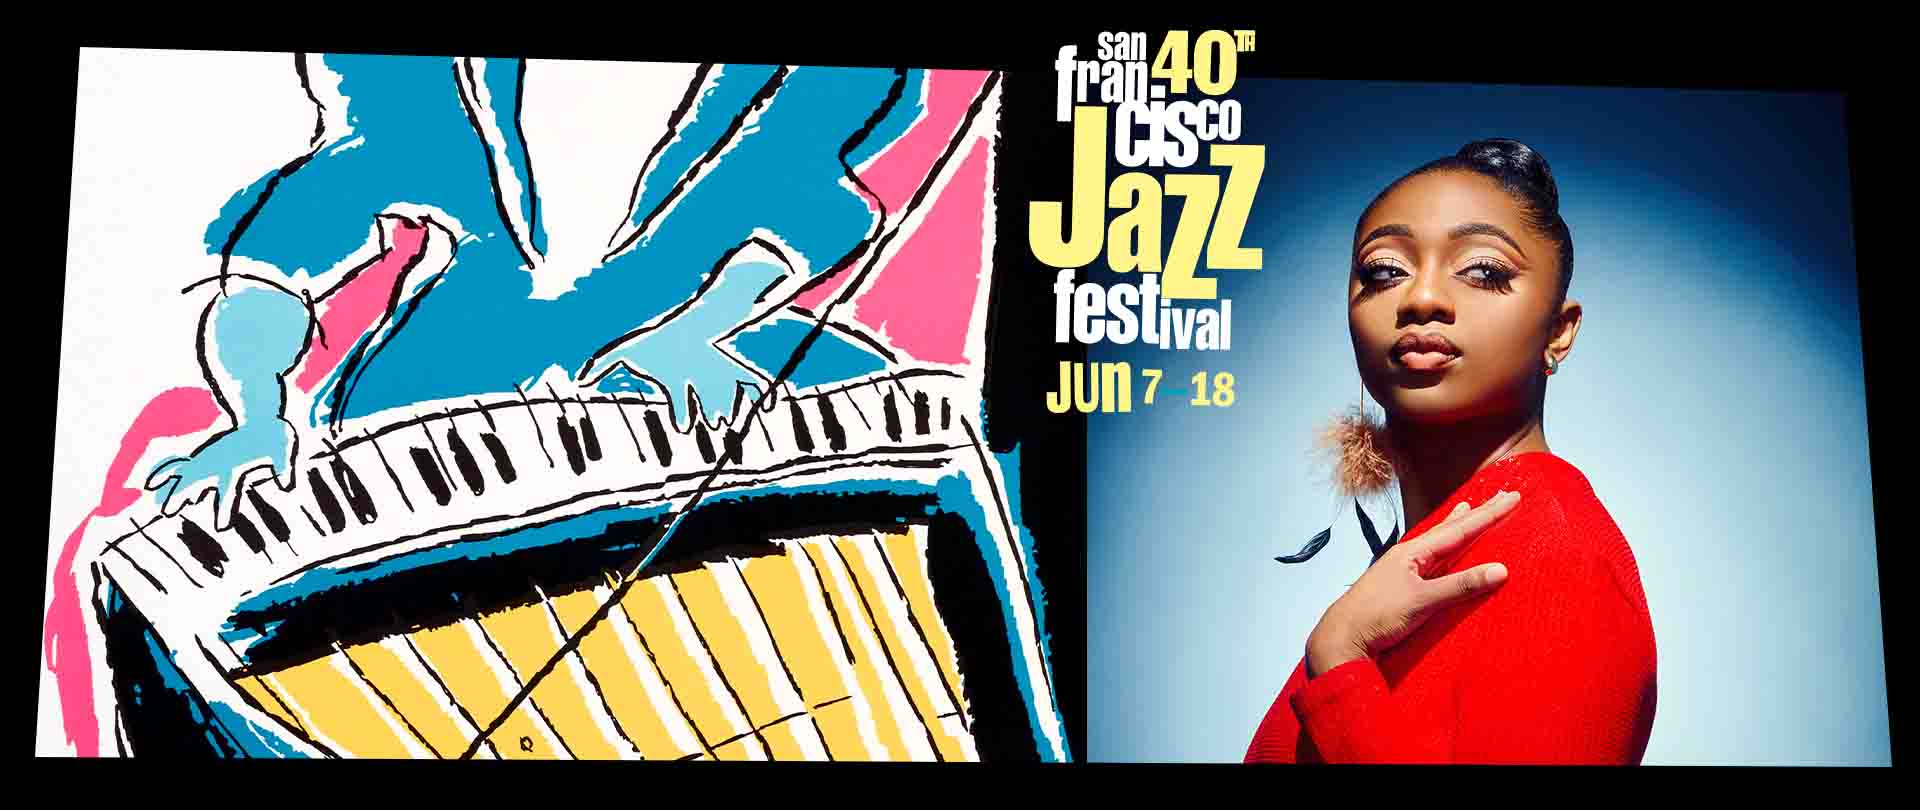 Samara Joy with the 40th San Francisco Jazz Festival logo